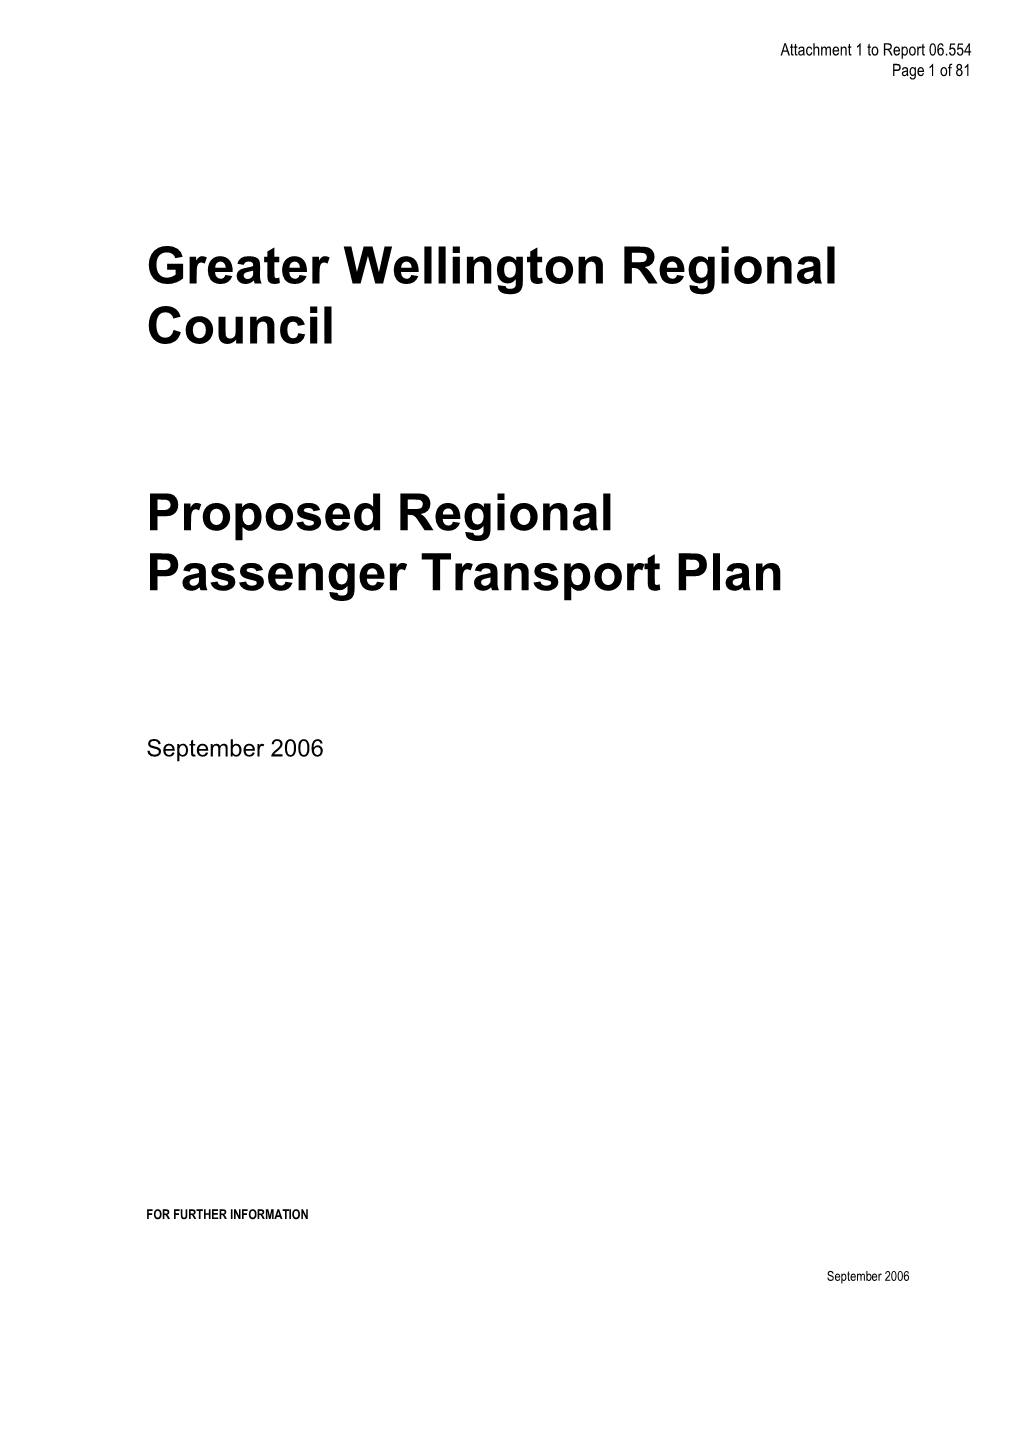 Greater Wellington Regional Council Proposed Regional Passenger Transport Plan